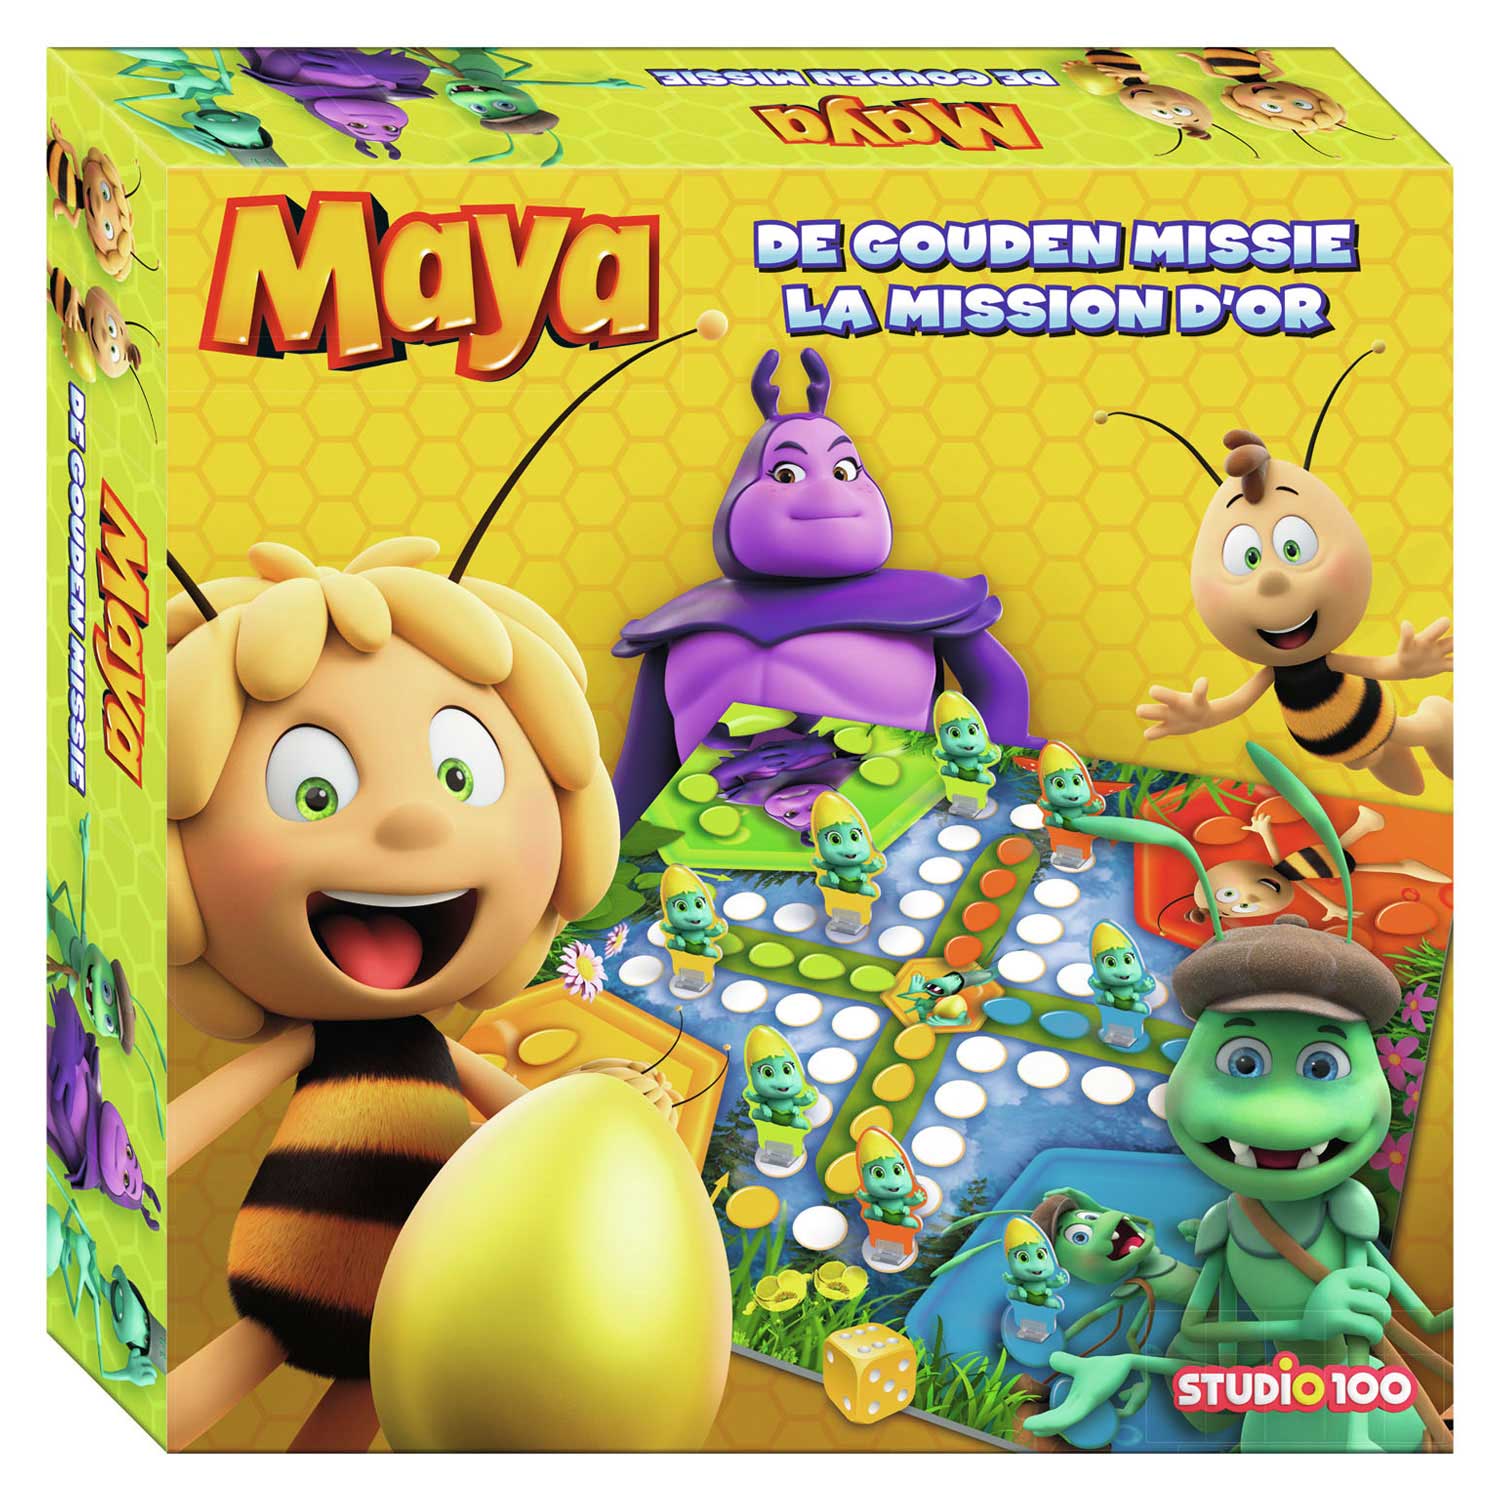 Maya the Bee Game movie 3 Thimble Toys